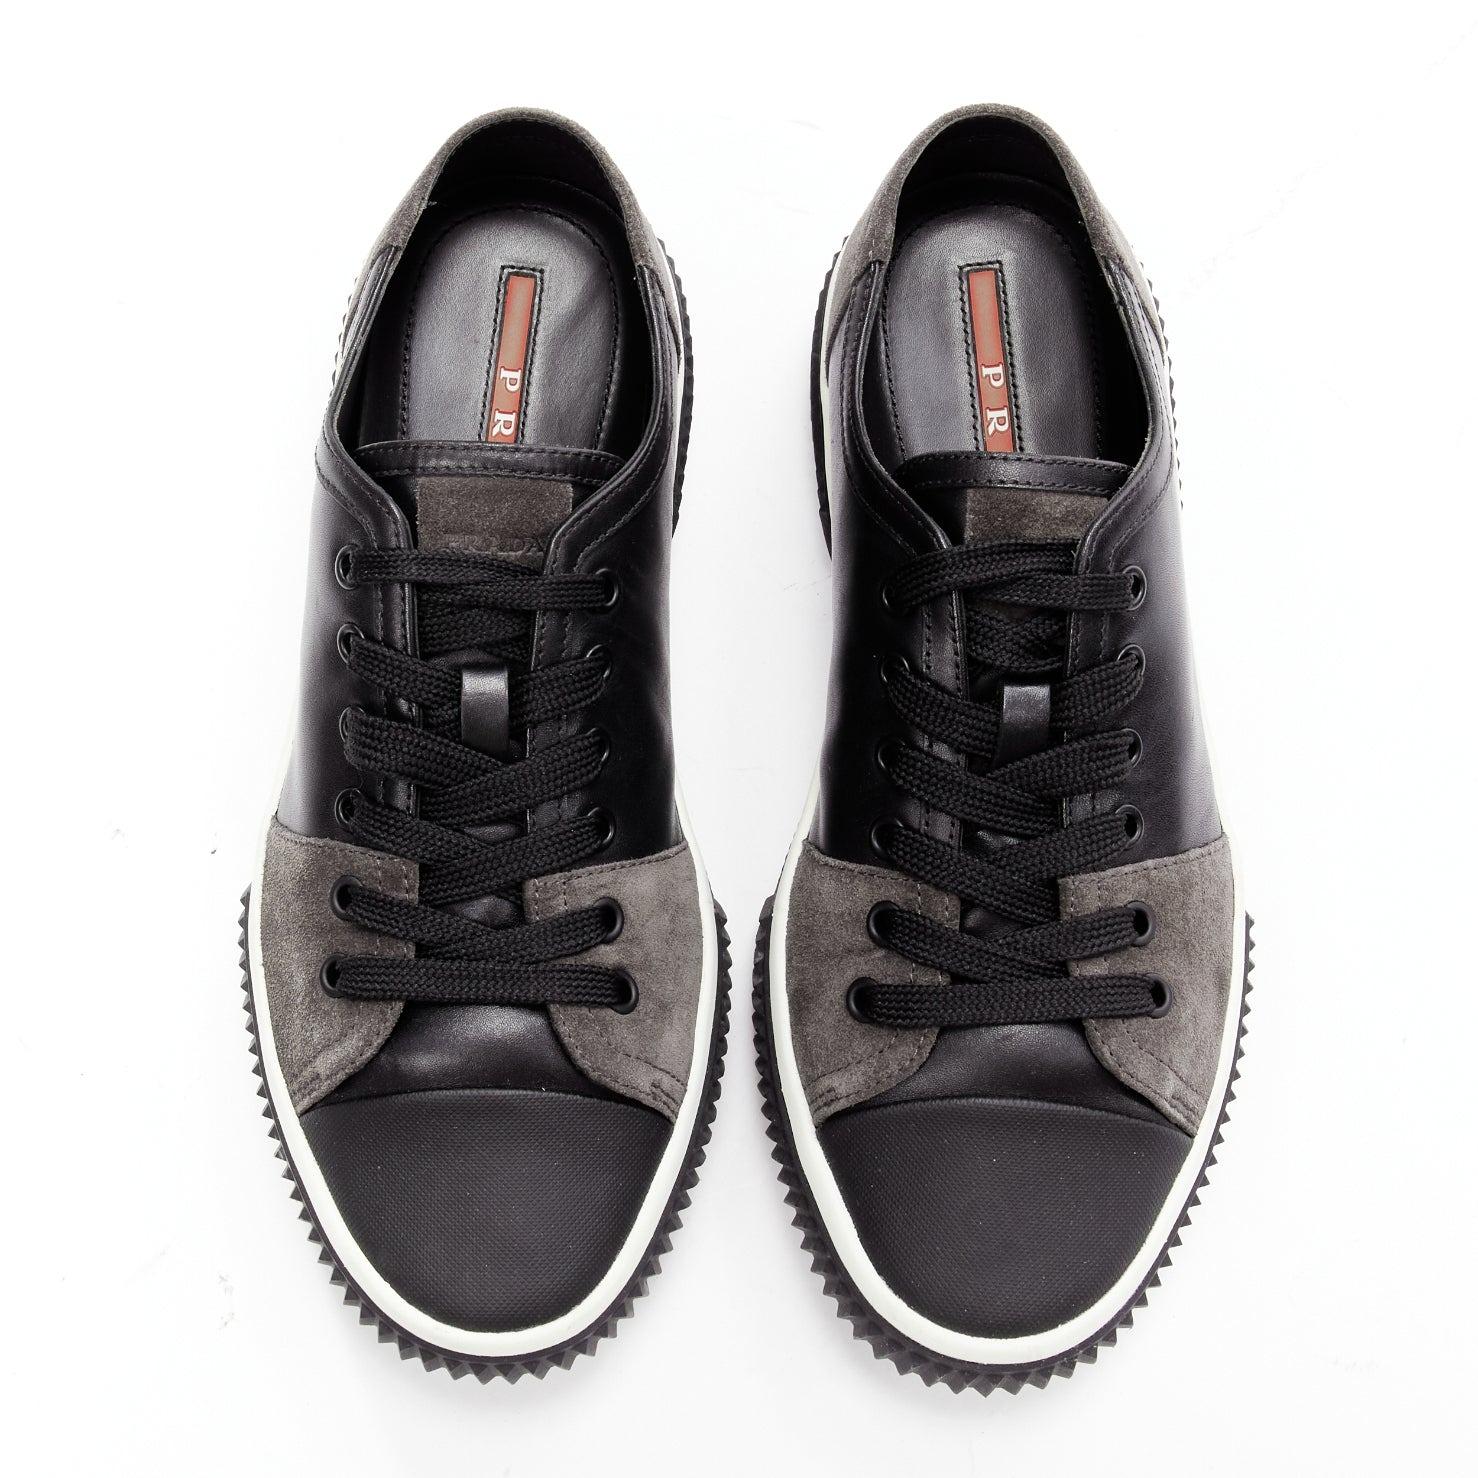 Black PRADA Stratus black grey suede leather low top sneakers UK5.5 EU39.5 For Sale